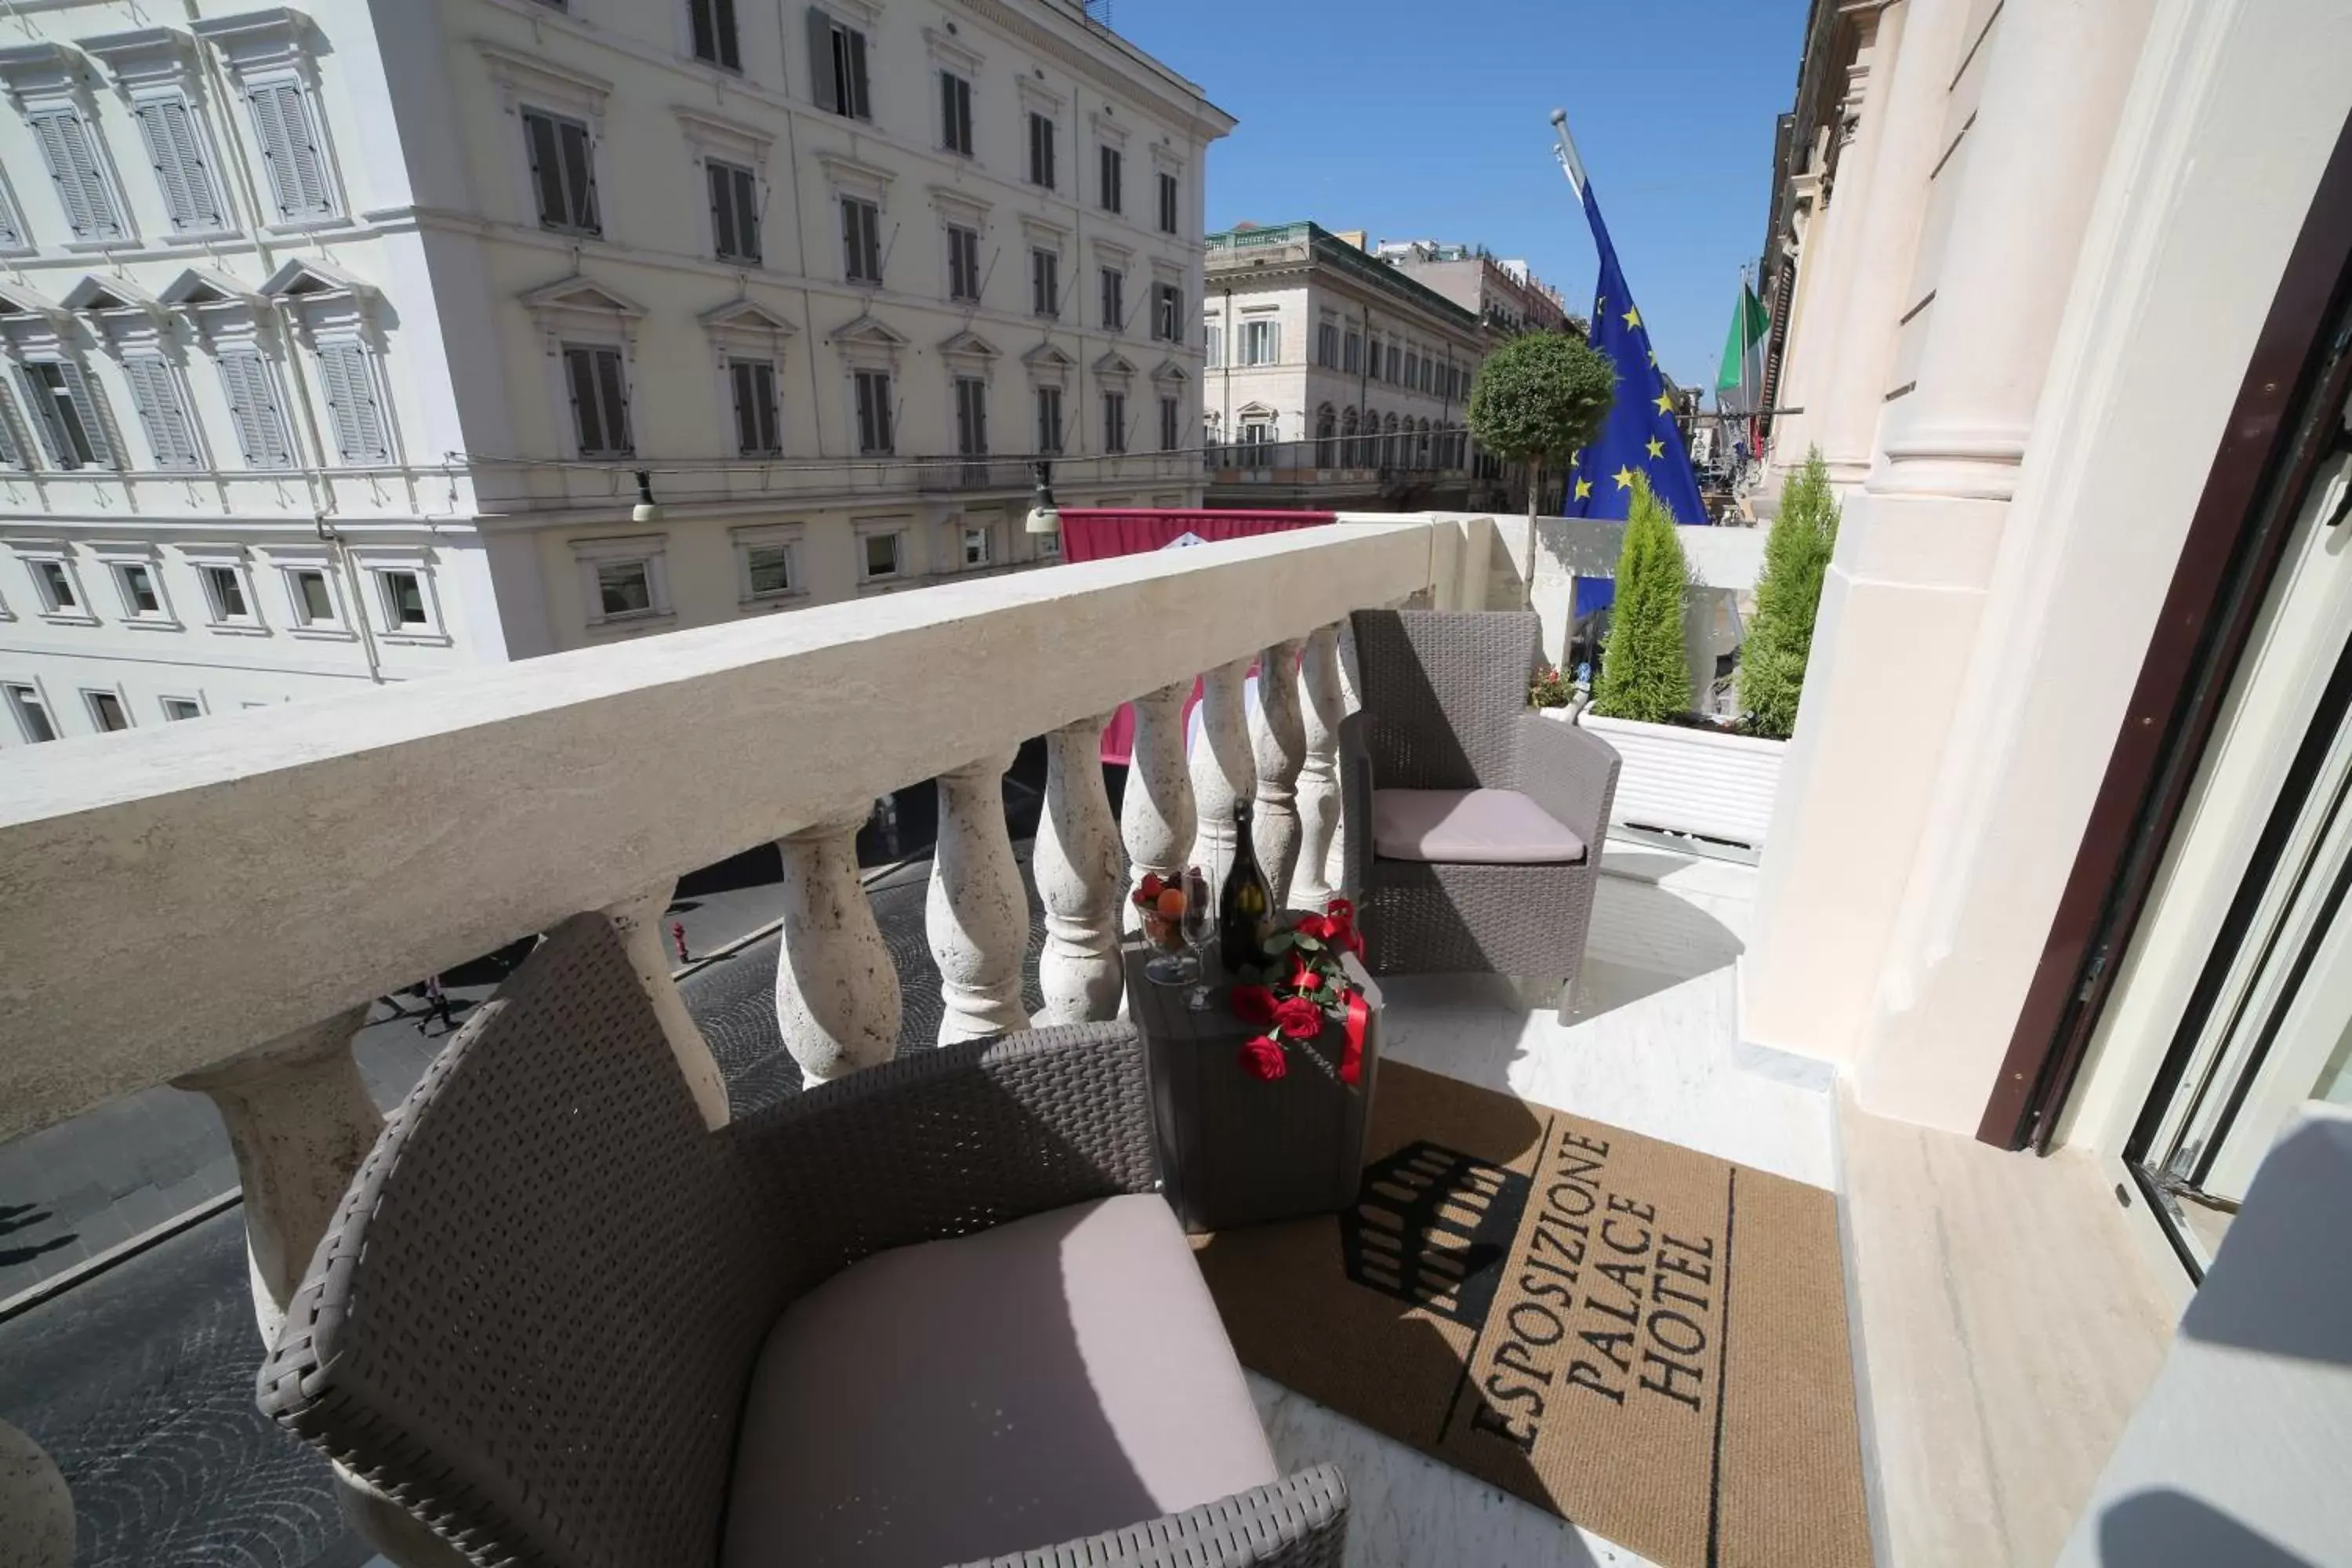 Balcony/Terrace in Esposizione Palace Hotel